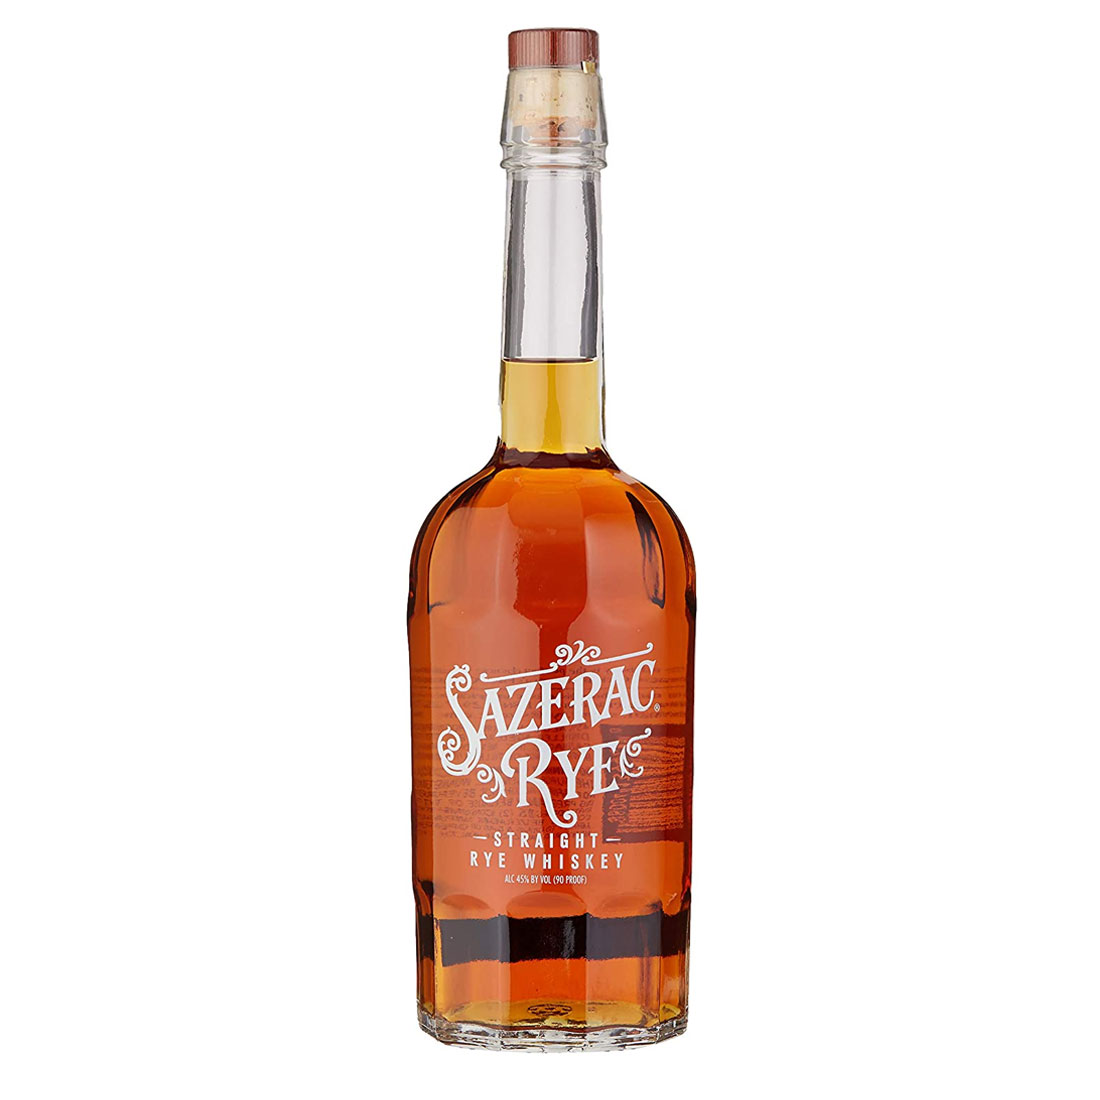 LB_Bottle-Sazerac-Rye